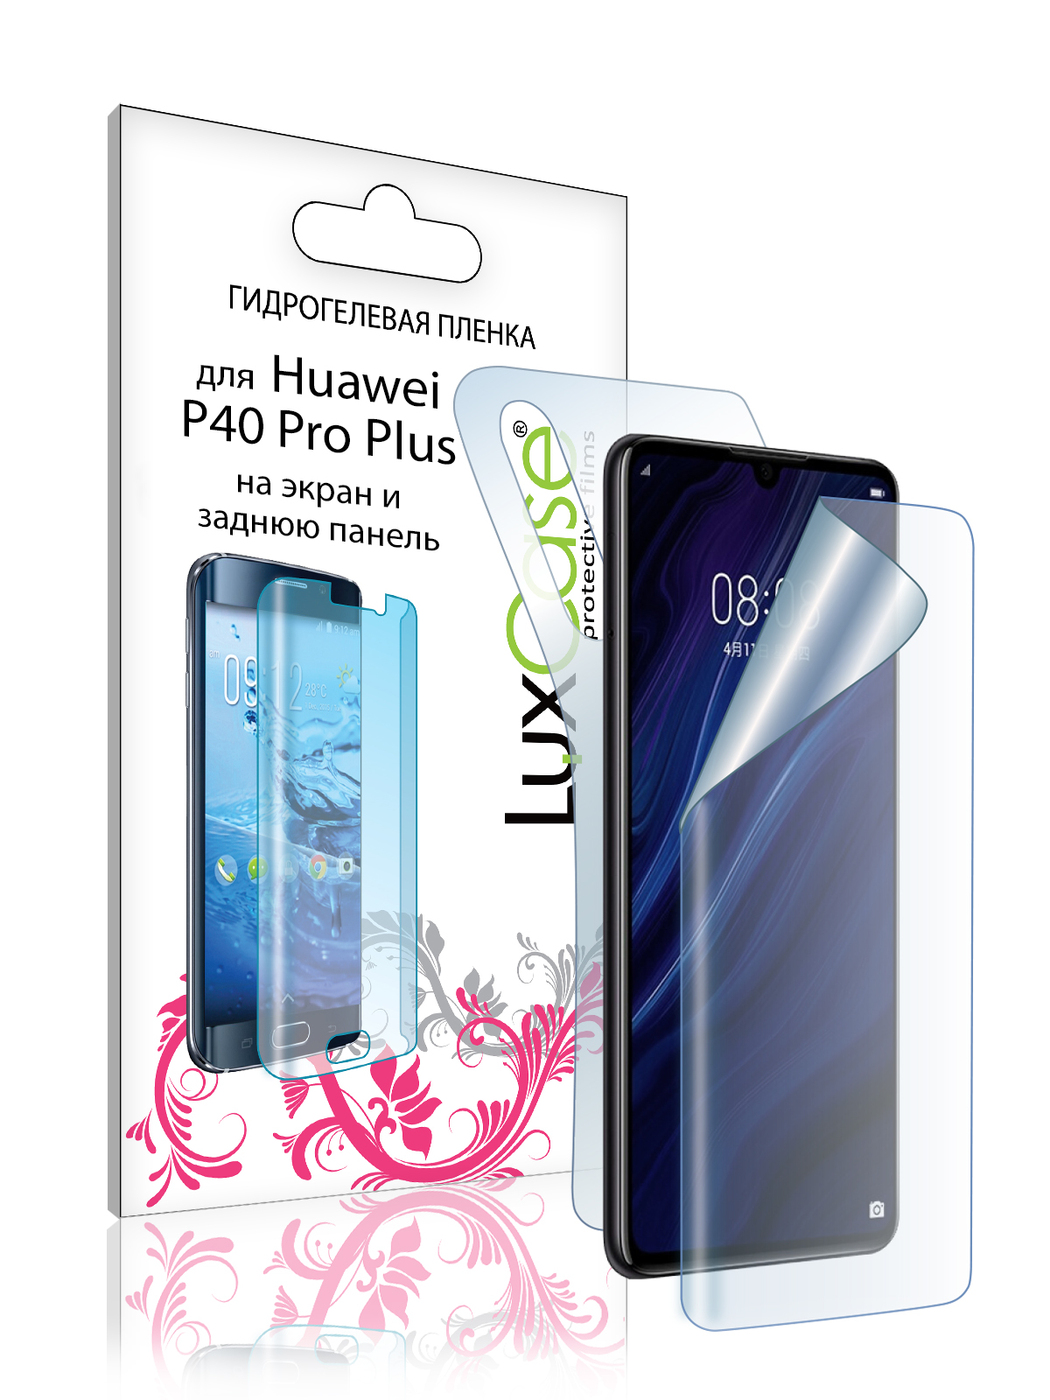 Защитная пленка LuxCase для Huawei P40 Pro Plus Front and Back 0.14mm Transparent 86135 защитная пленка luxcase для huawei p40 pro back 0 14mm transparent 86125